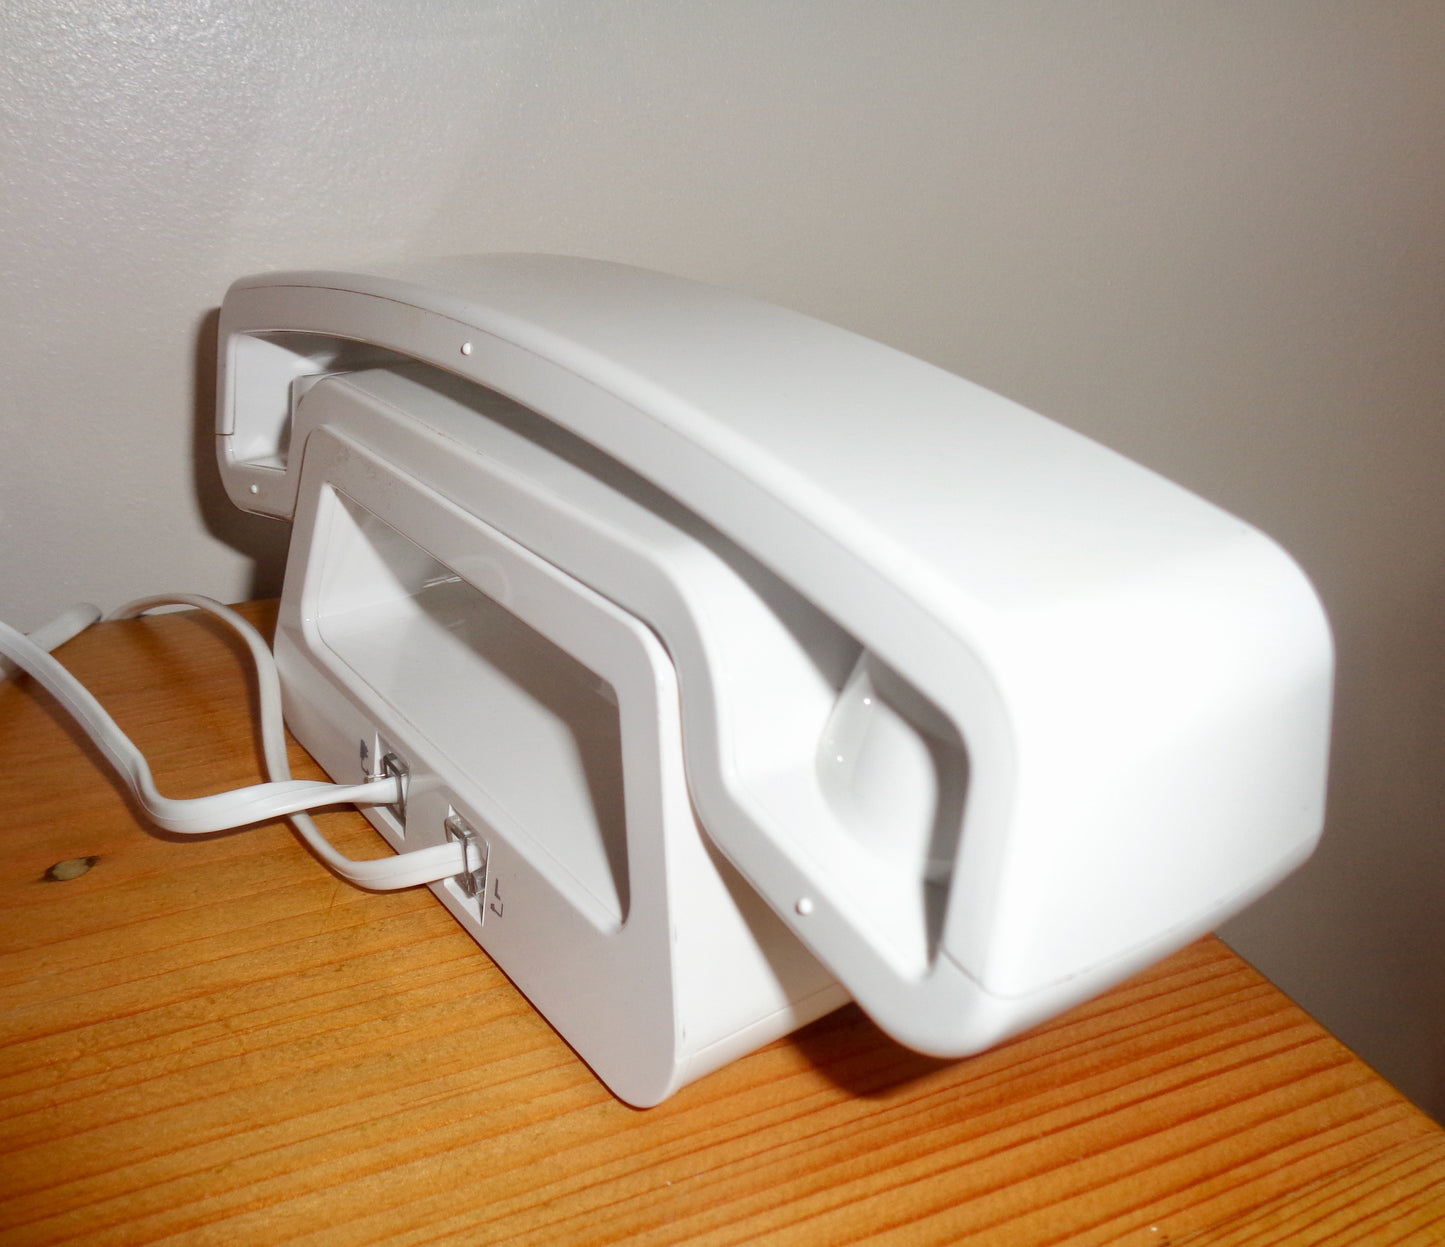 Original Swissvoice Epure DECT Cordless Analogue Telephone In White